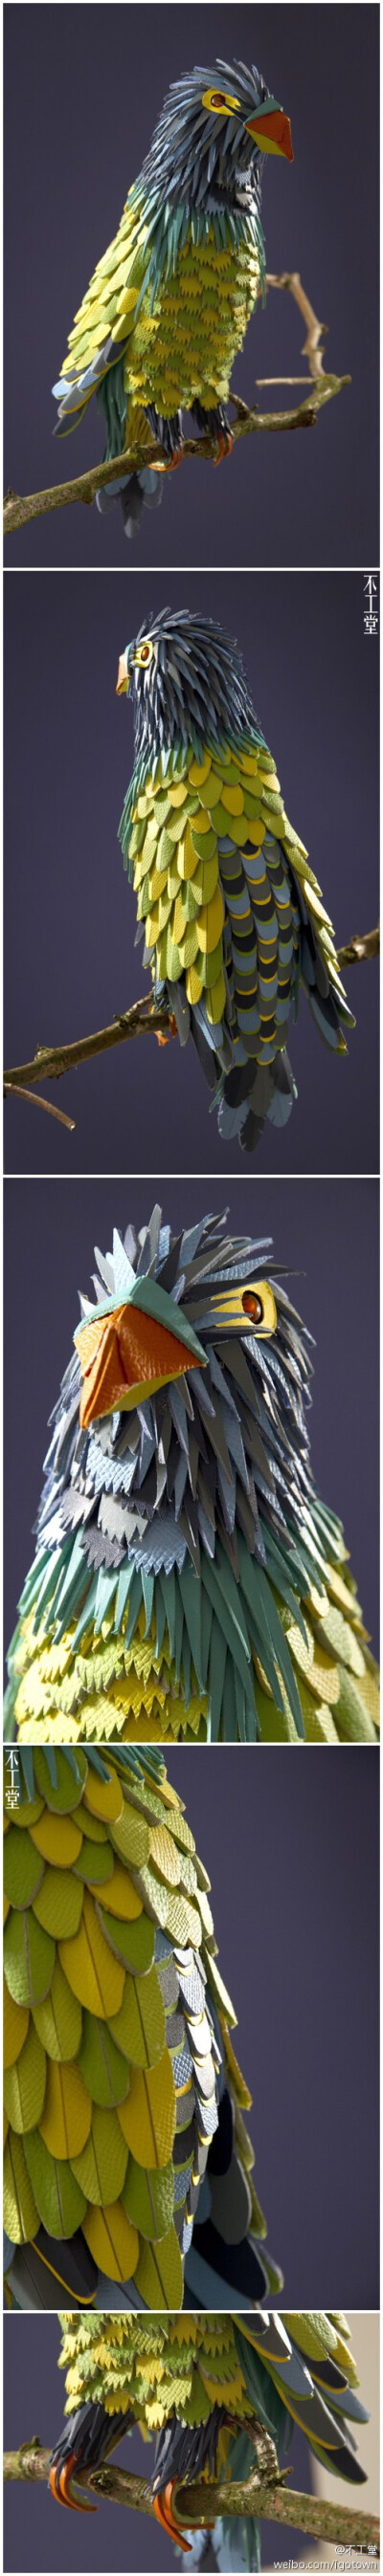 Zim and Zou以往的作品都以纸为材料，这次升级了，她们利用爱马仕工坊里的皮革下脚料制作了这只皮鹦鹉，用来参加位于香港的一个展览。